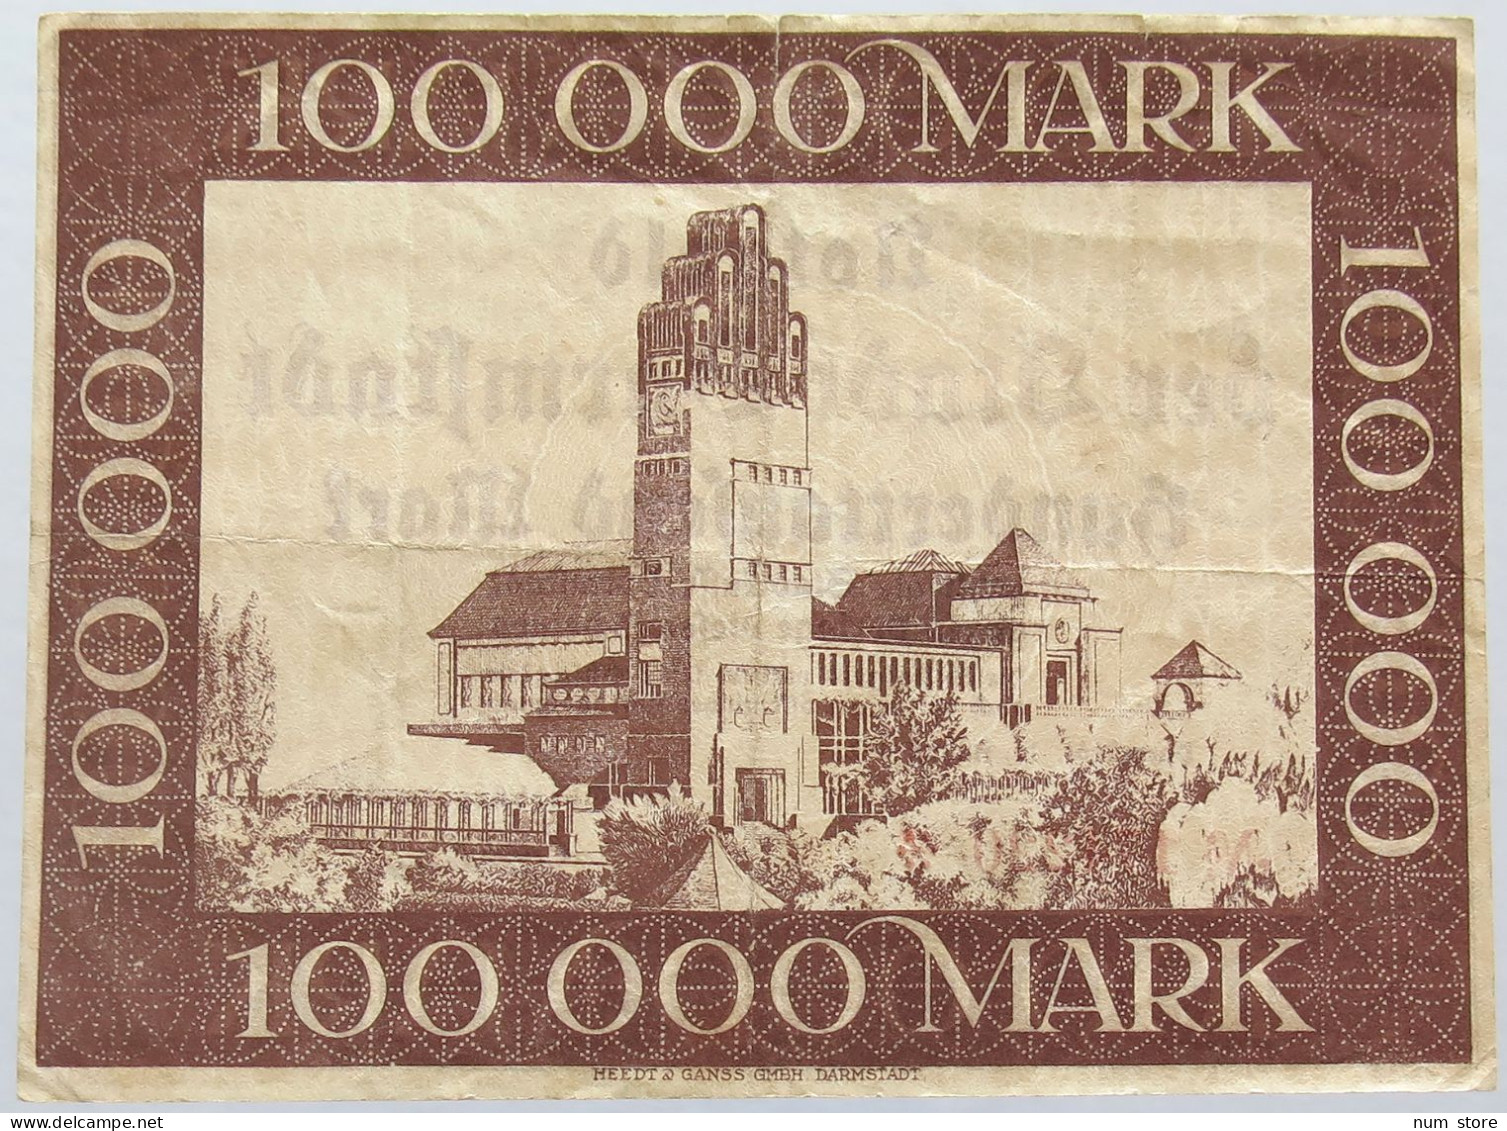 GERMANY 100000 MARK DARMSTADT #alb004 0227 - 100.000 Mark